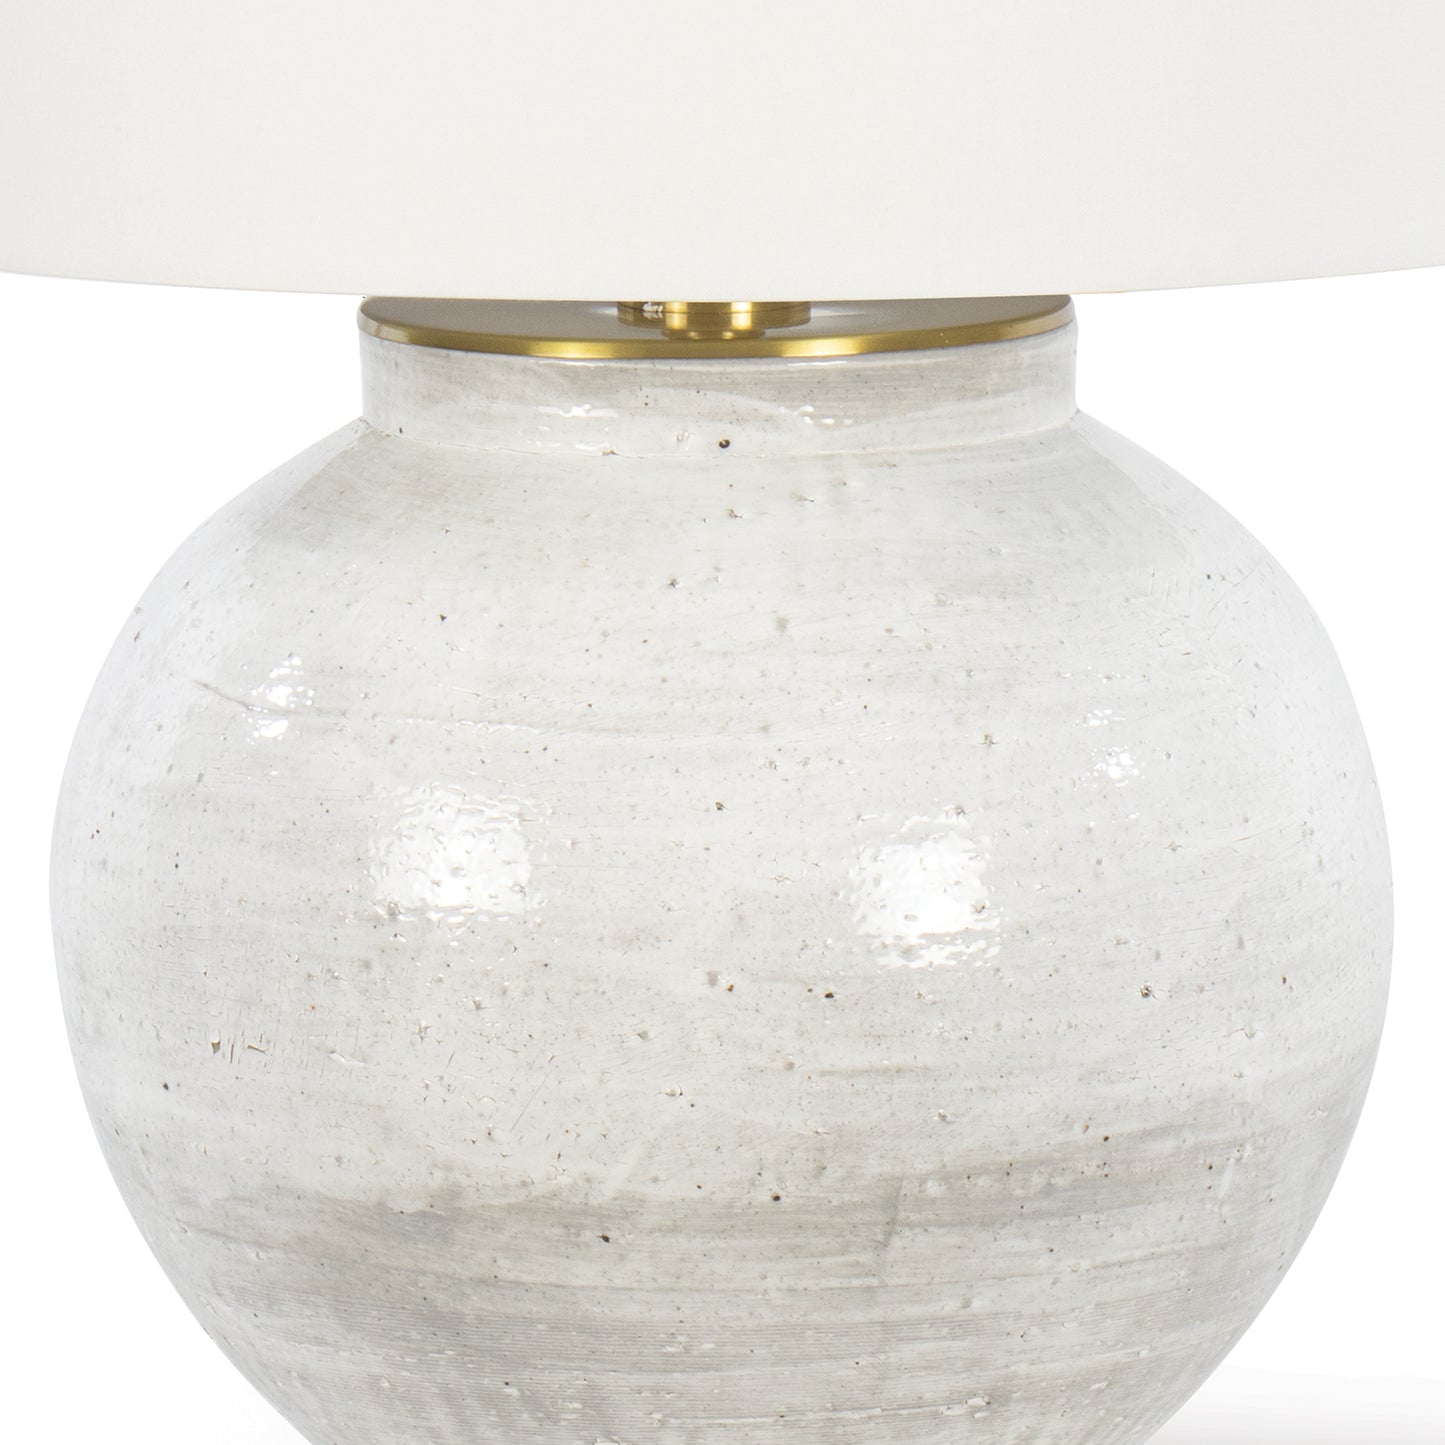 Deacon Ceramic Table Lamp by Regina Andrew